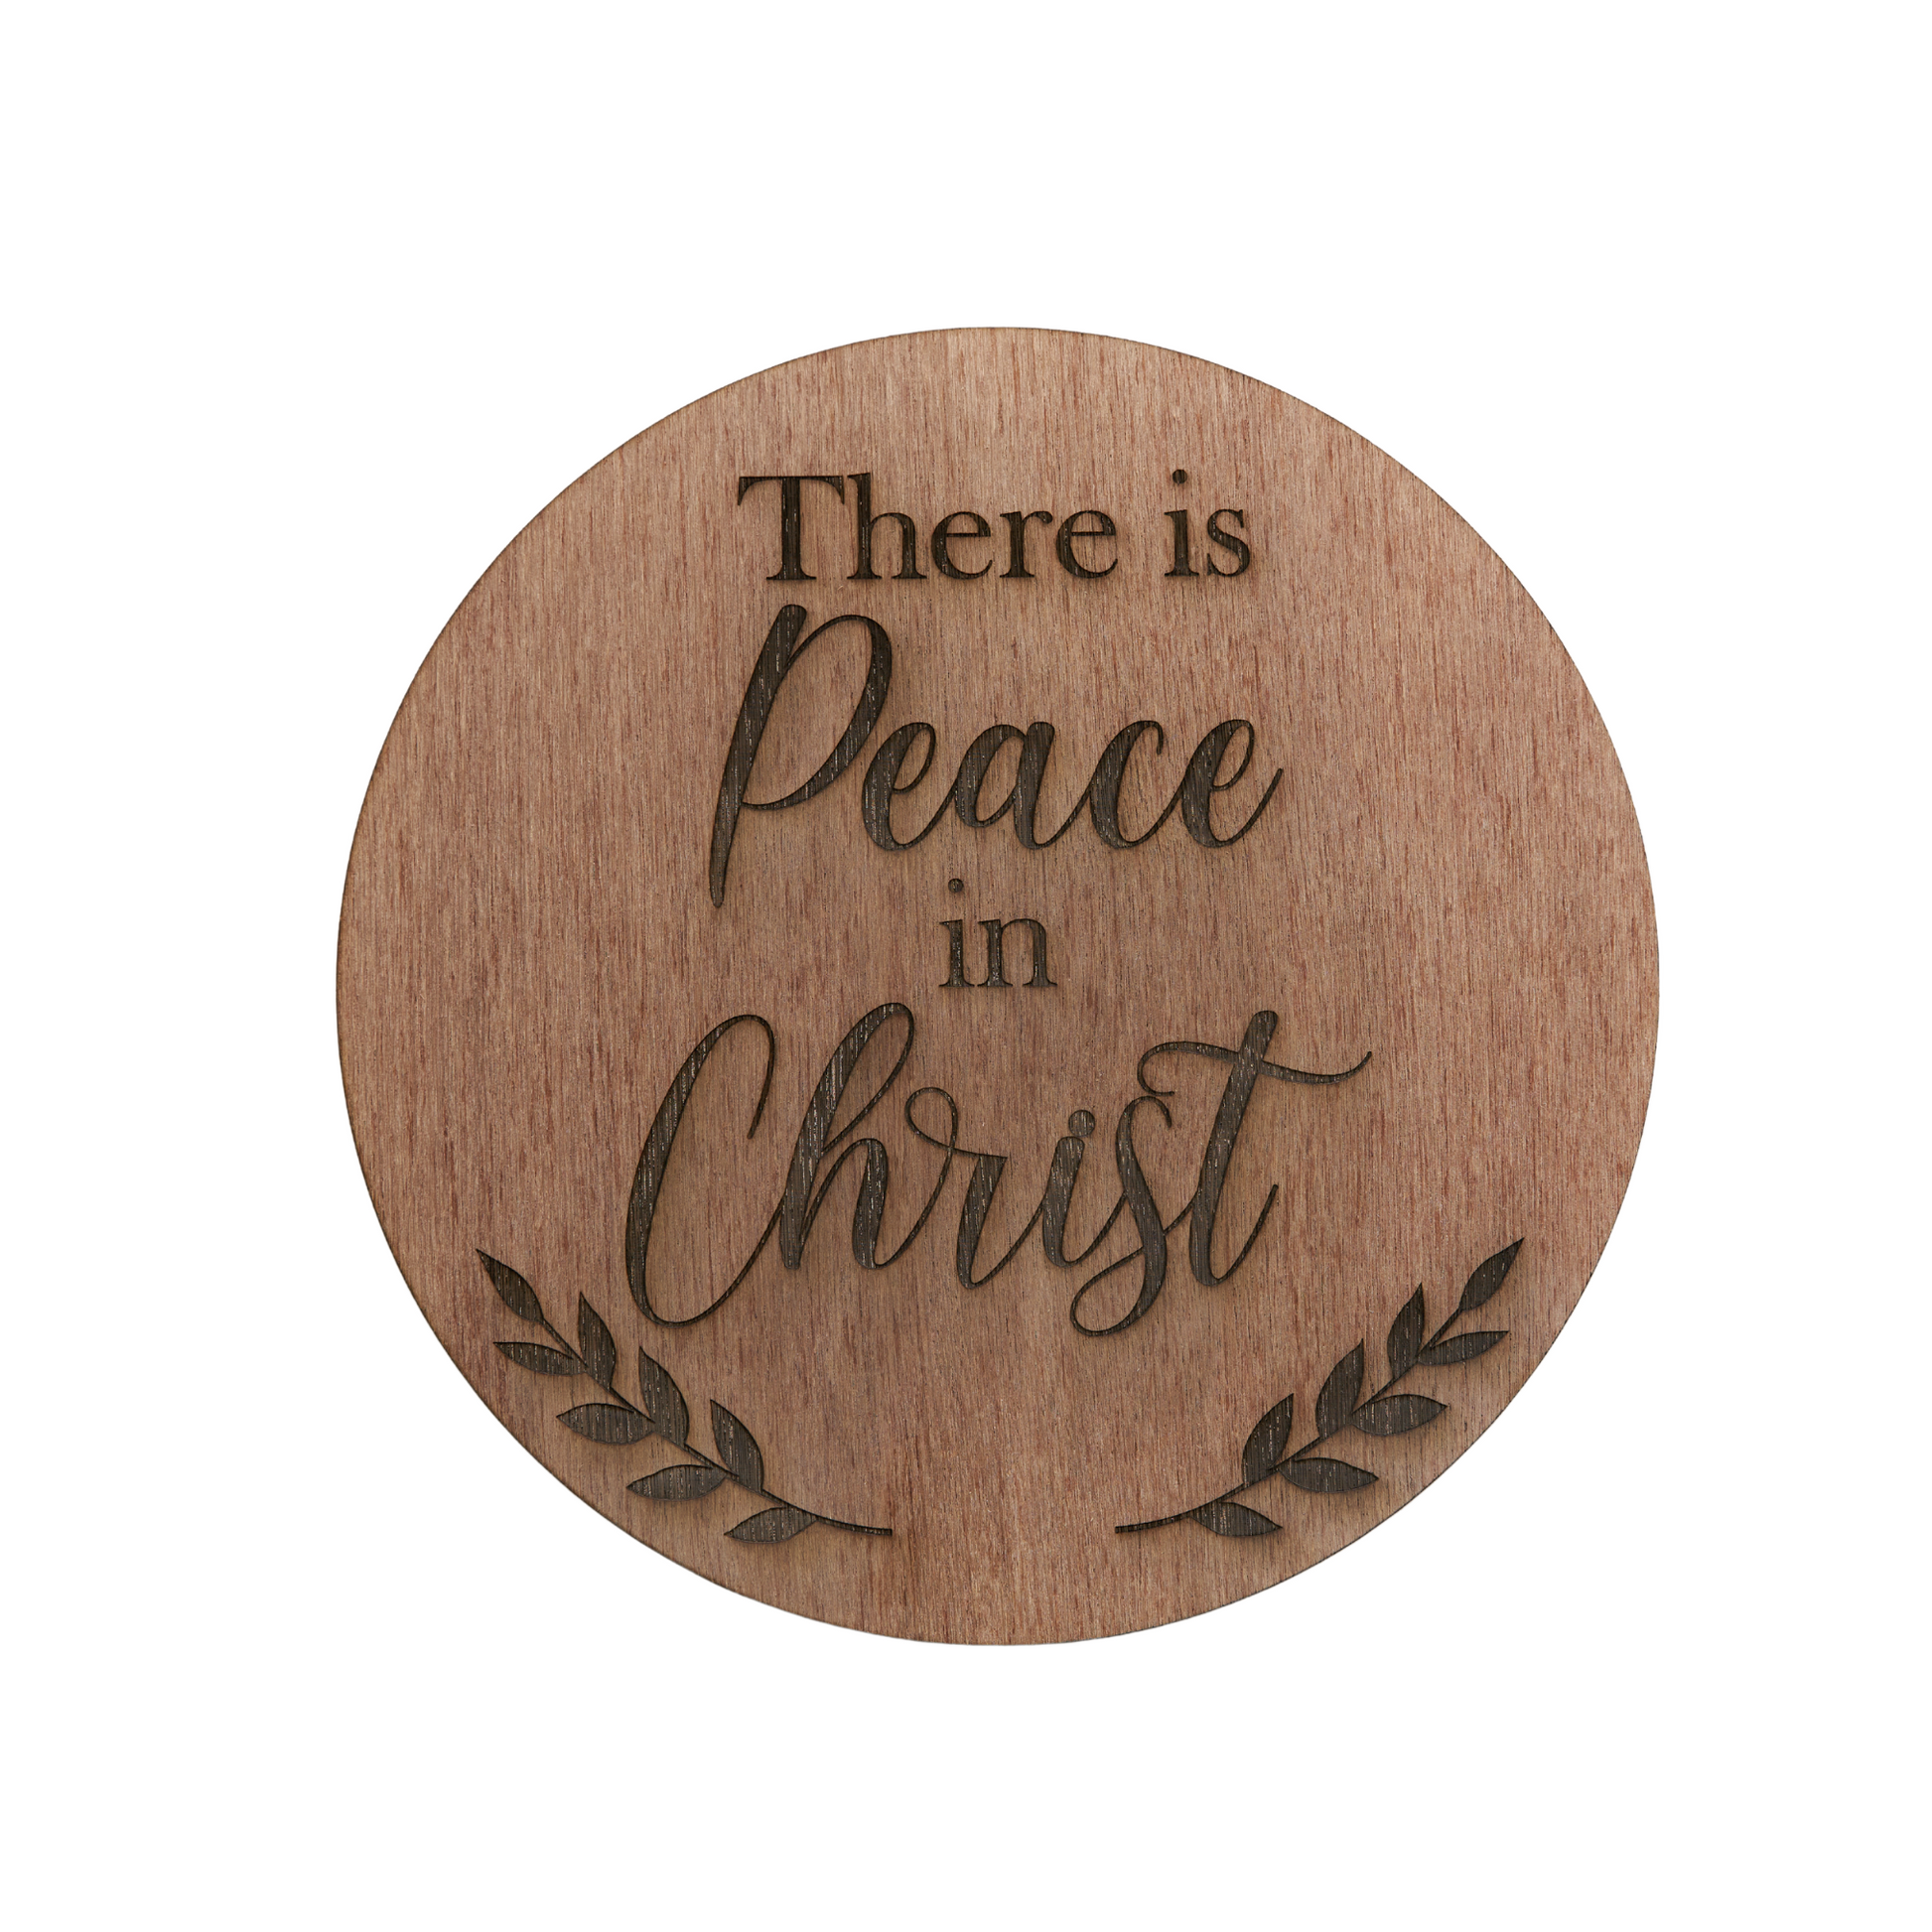 peace of christ symbol